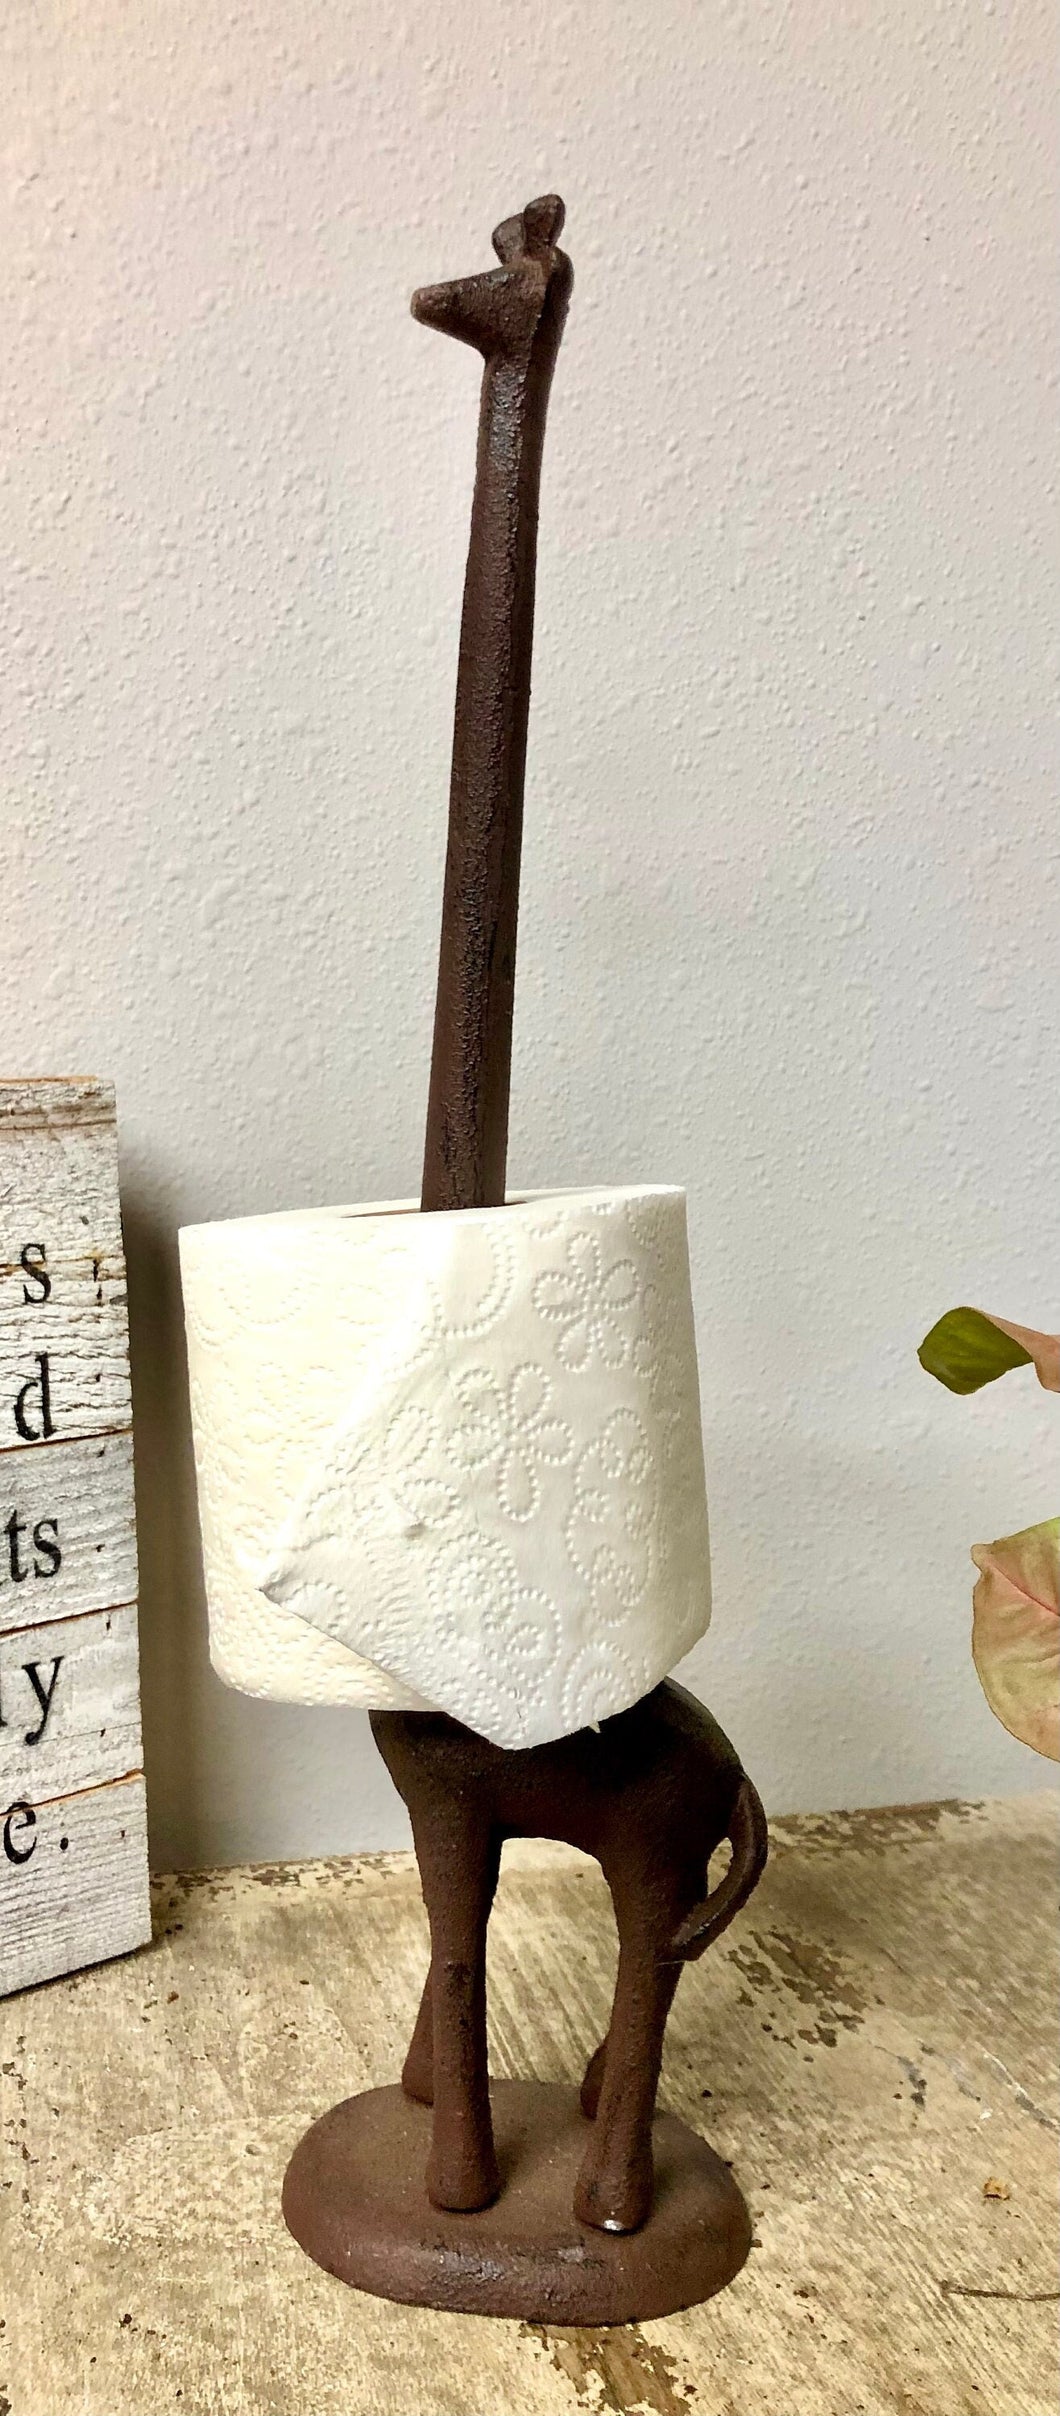 Giraffe Cast Iron Paper Towel or Toilet Paper Holder